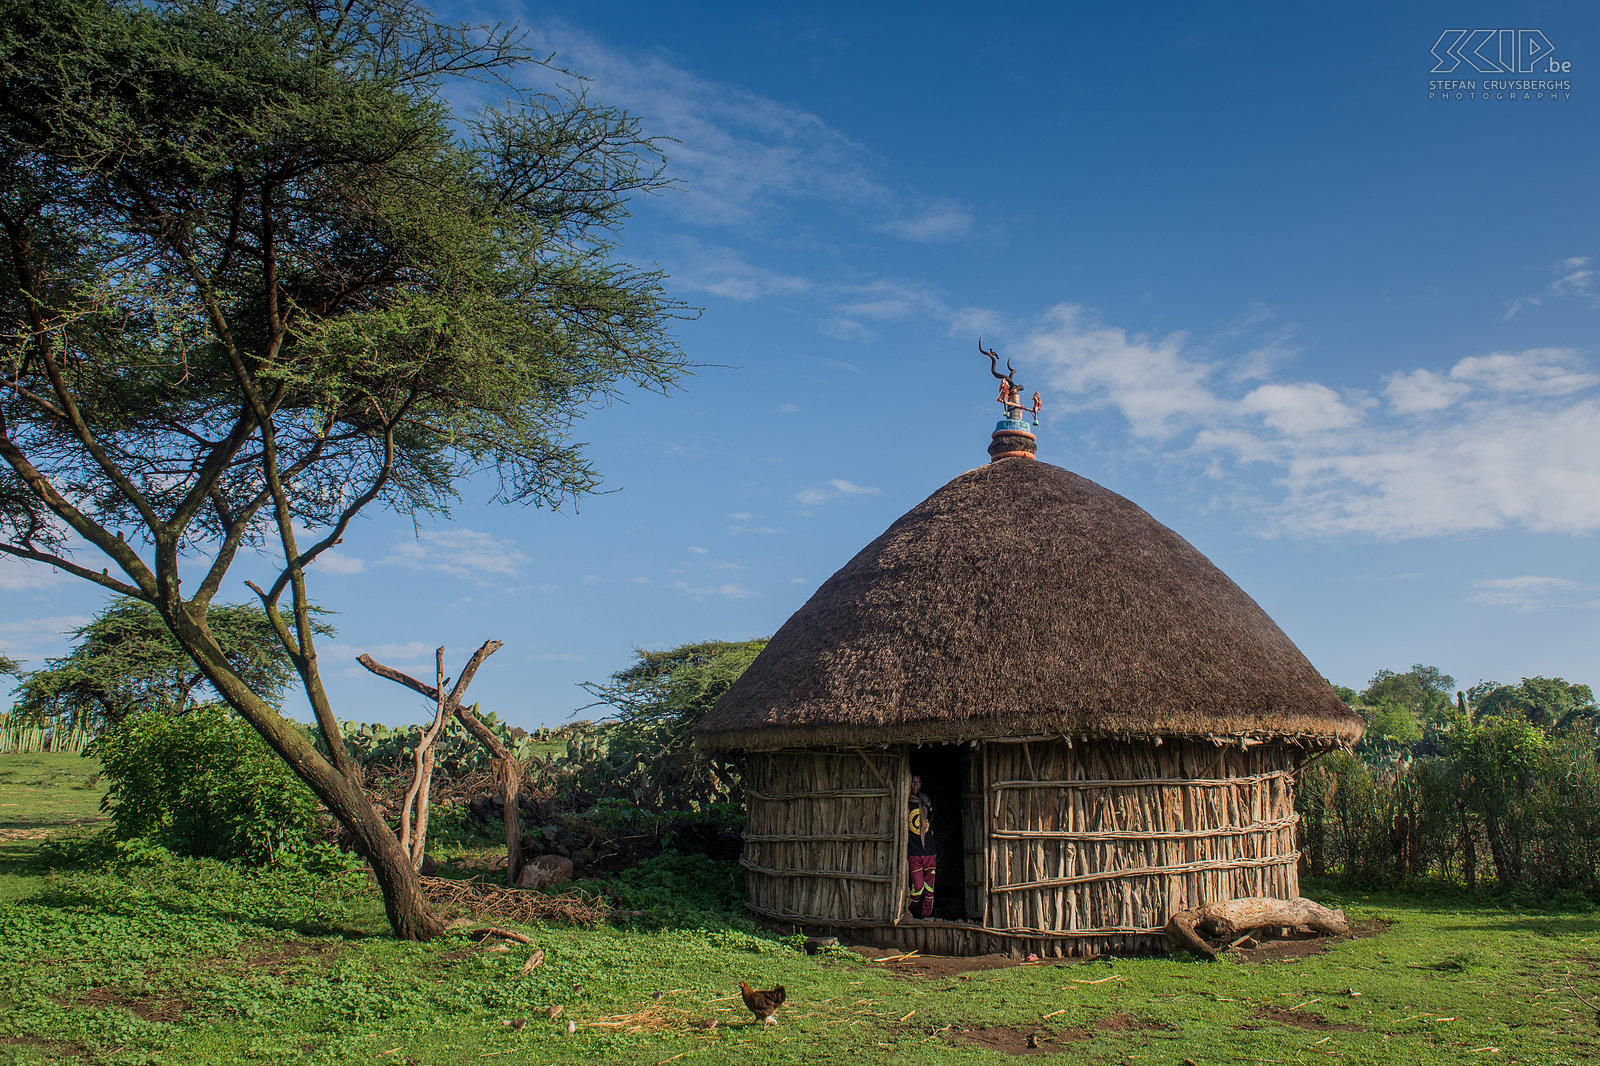 Lake Chitu - Hut Traditionele woning in de Rift Vallei regio van Ethiopië Stefan Cruysberghs